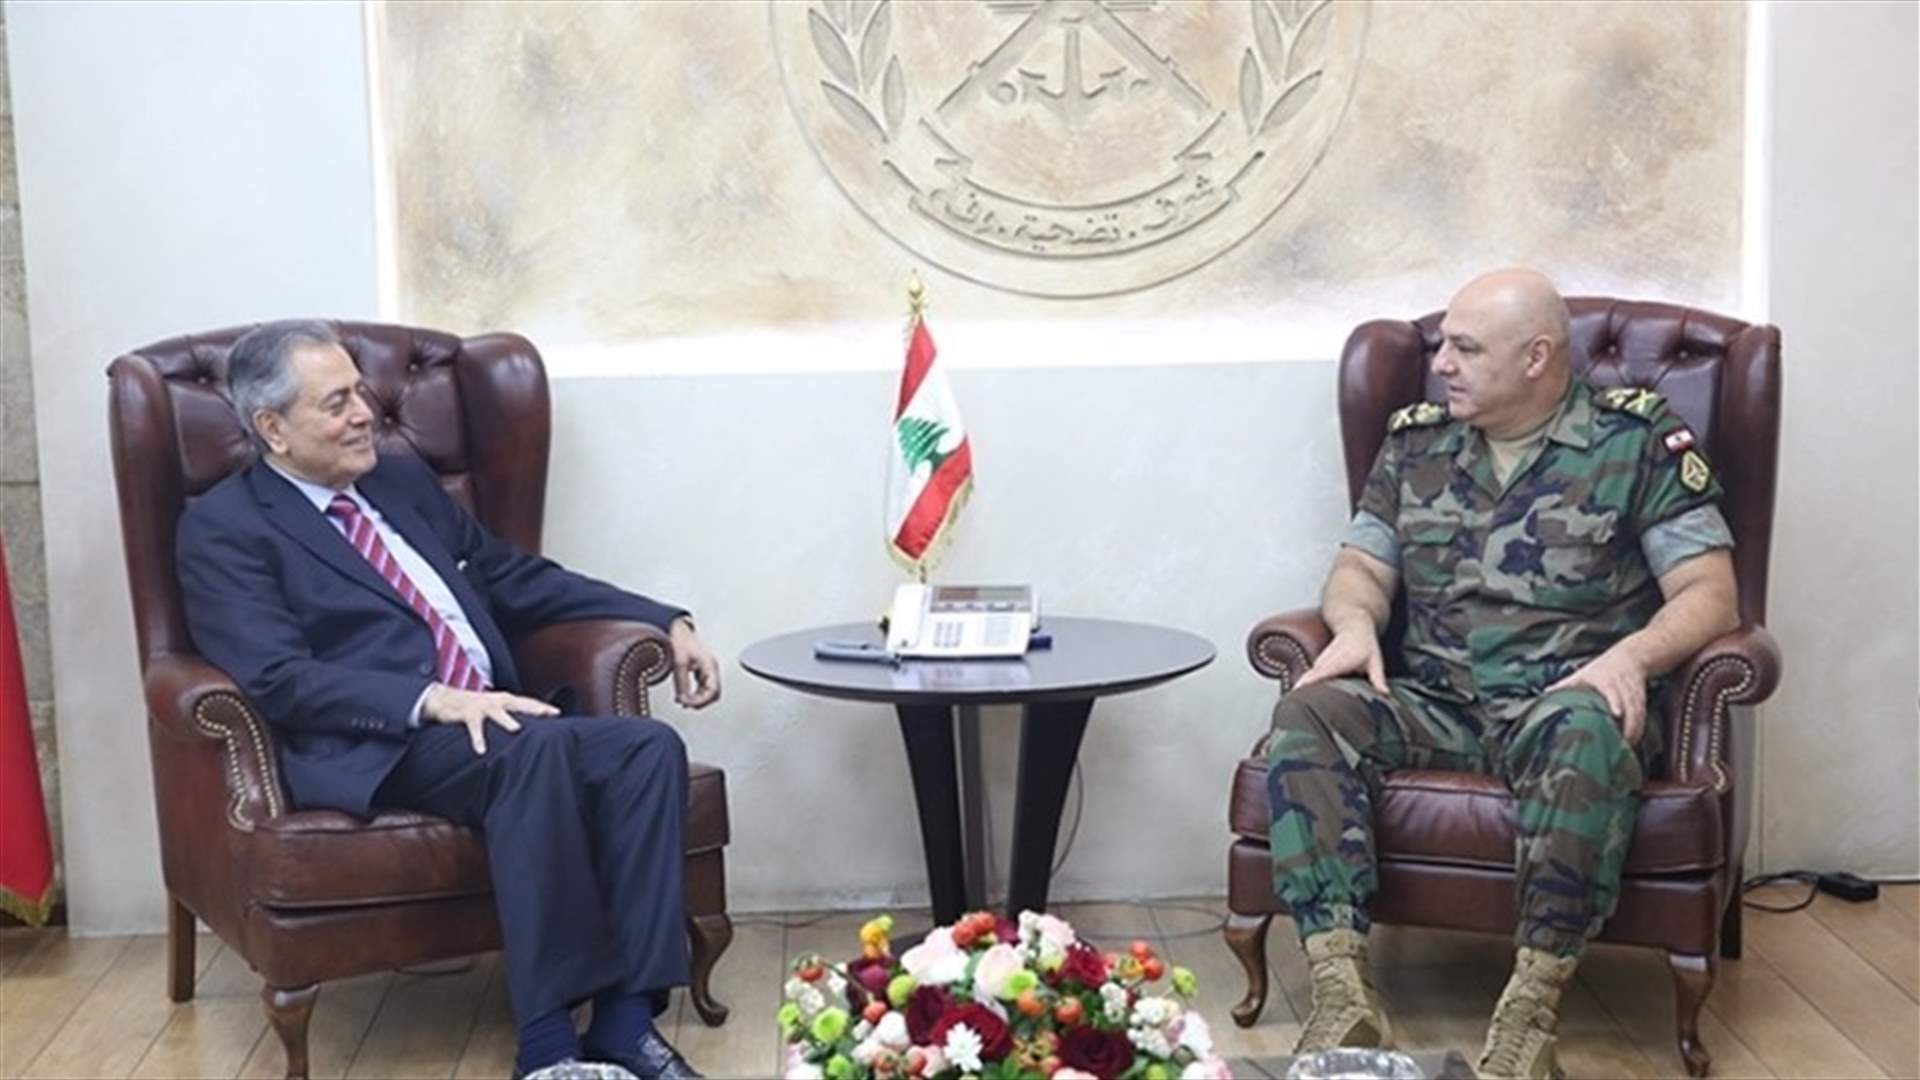 LAF commander meets with Syrian ambassador